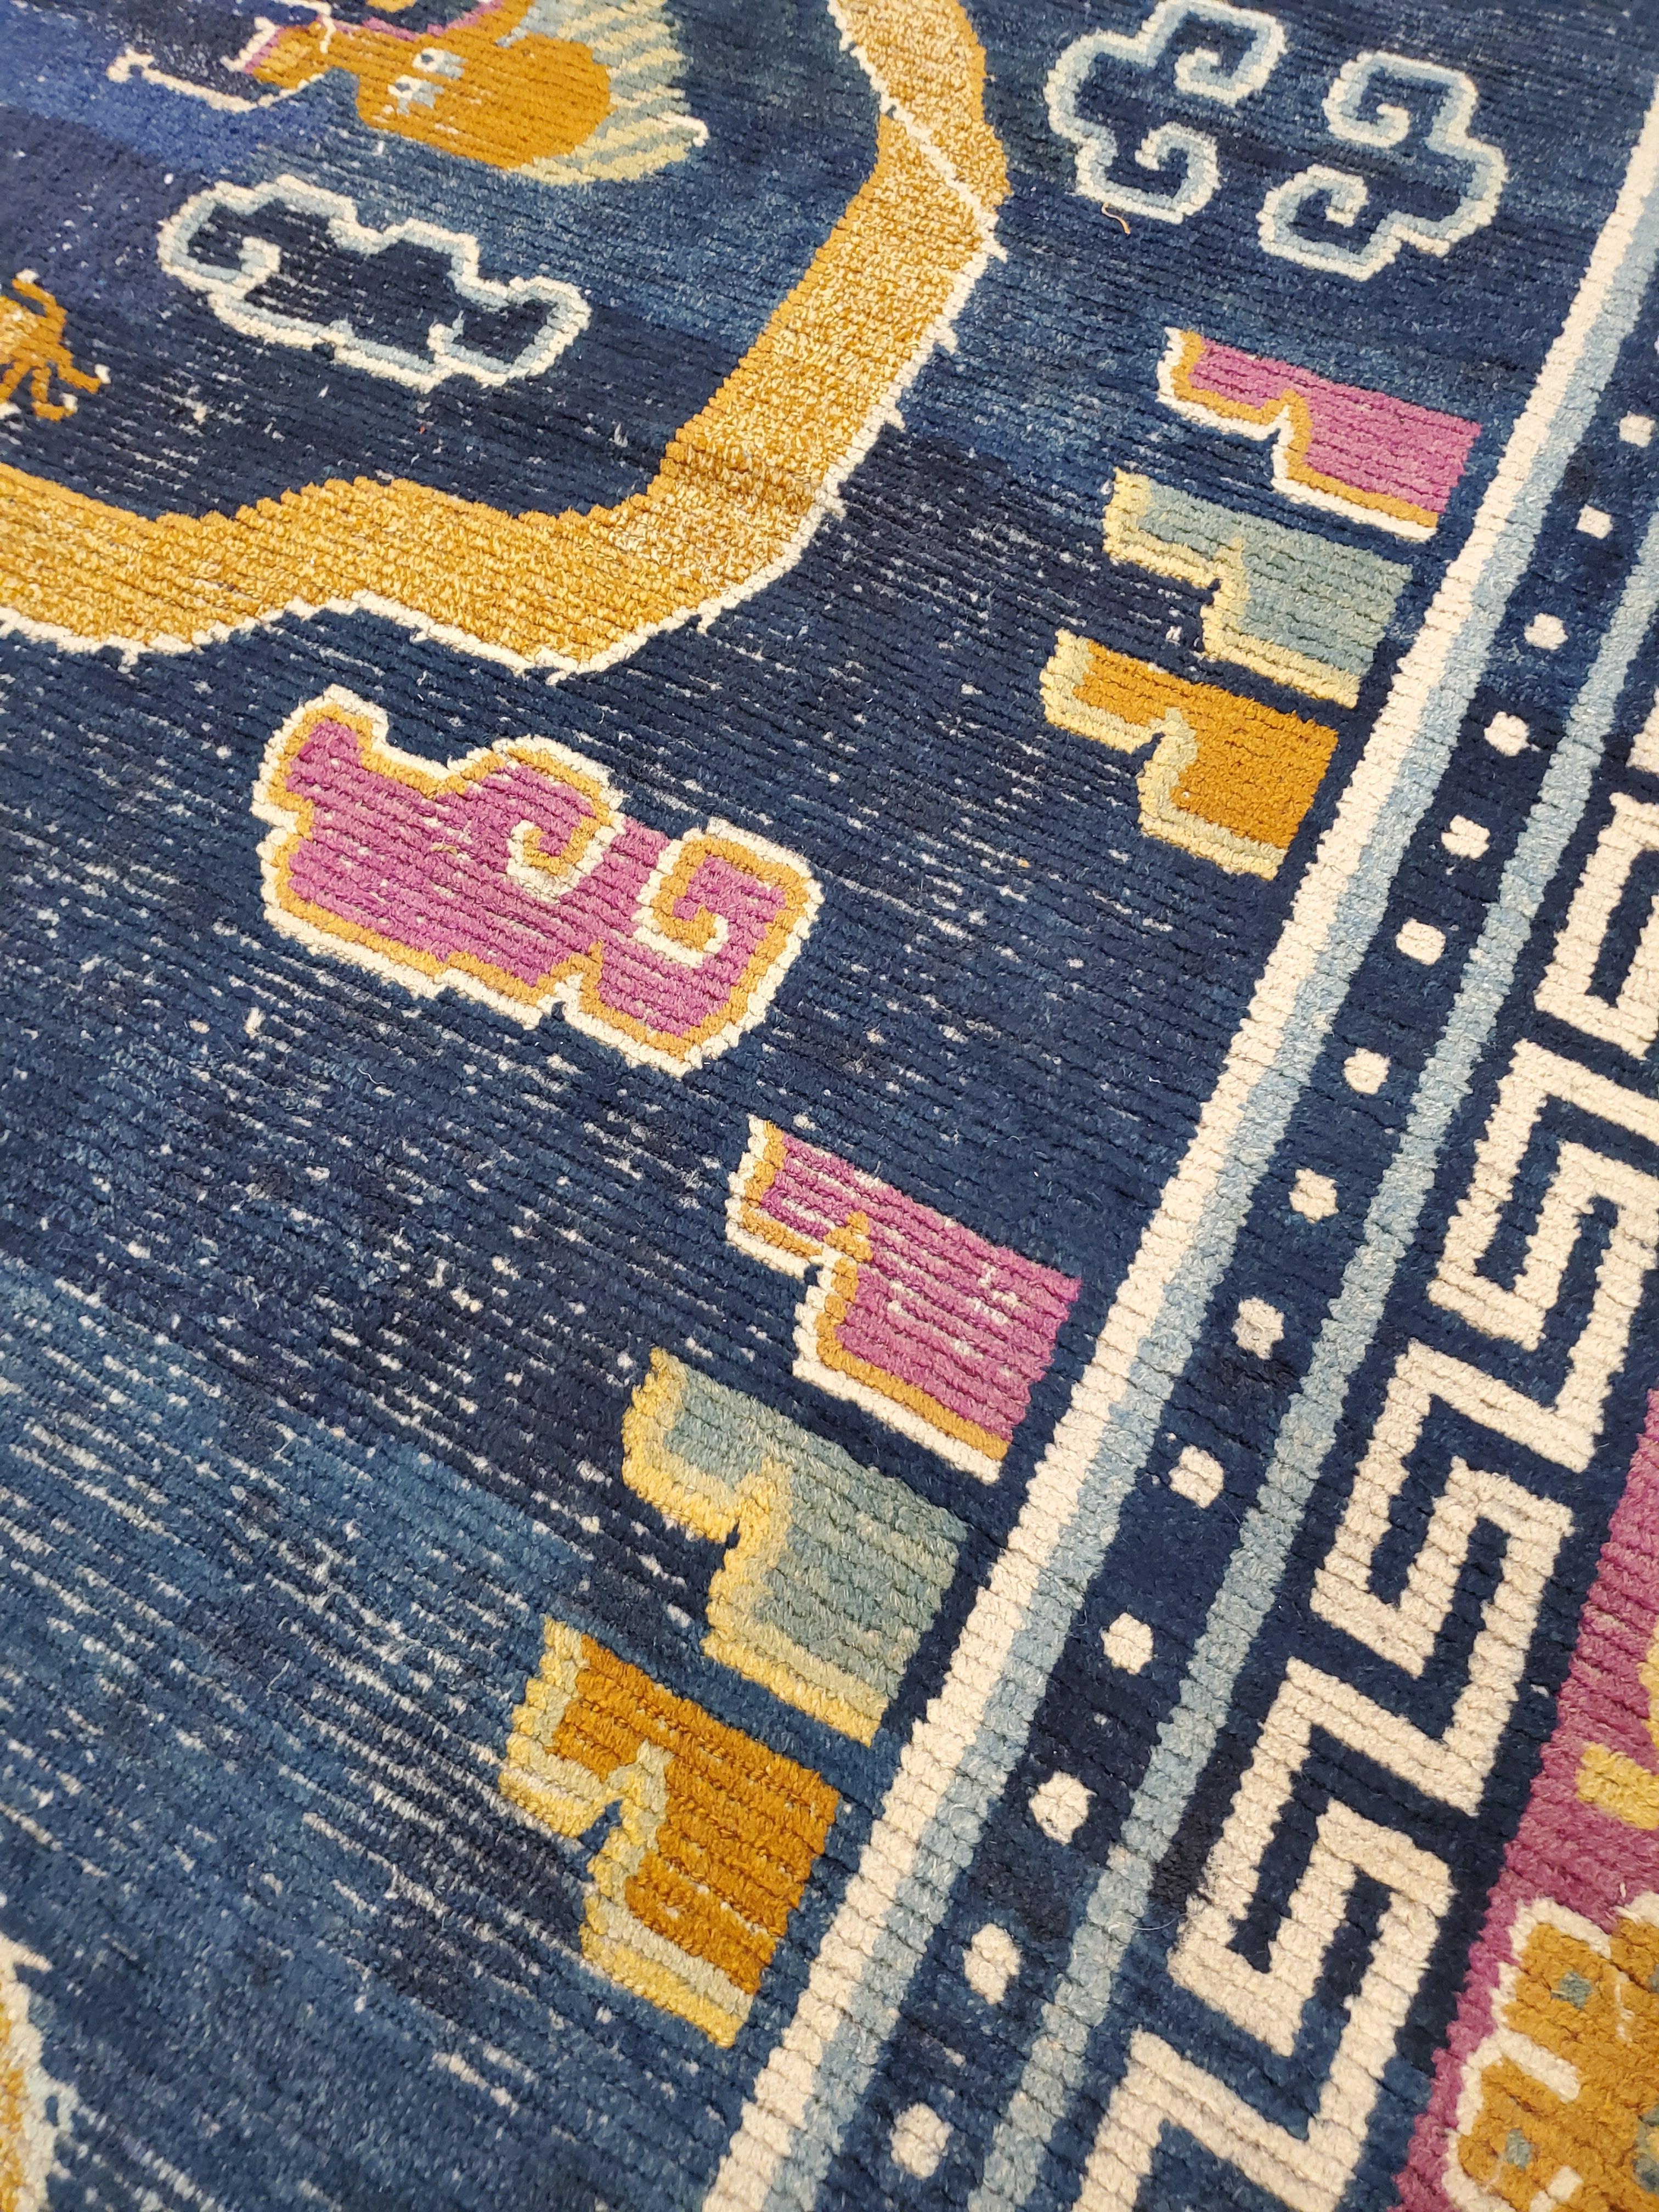 Antique Tibetan Carpet, Circa 1880 Handmade Oriental Rug, Blue, Gold, Tan, Cream 6